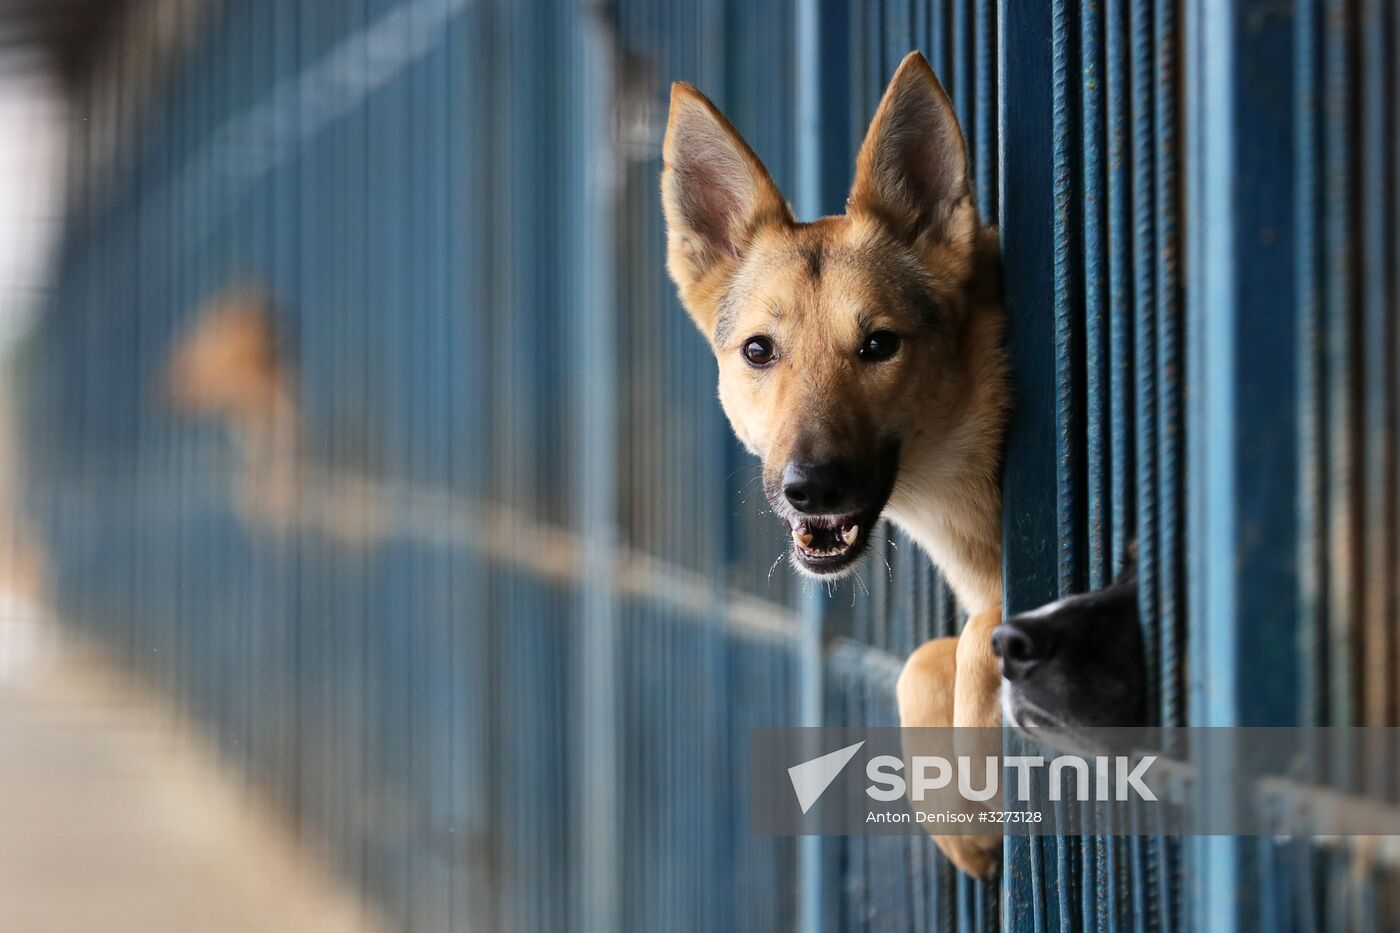 Liberal Democratic Party leader Zhirinovsky visits Red Pine dog shelter